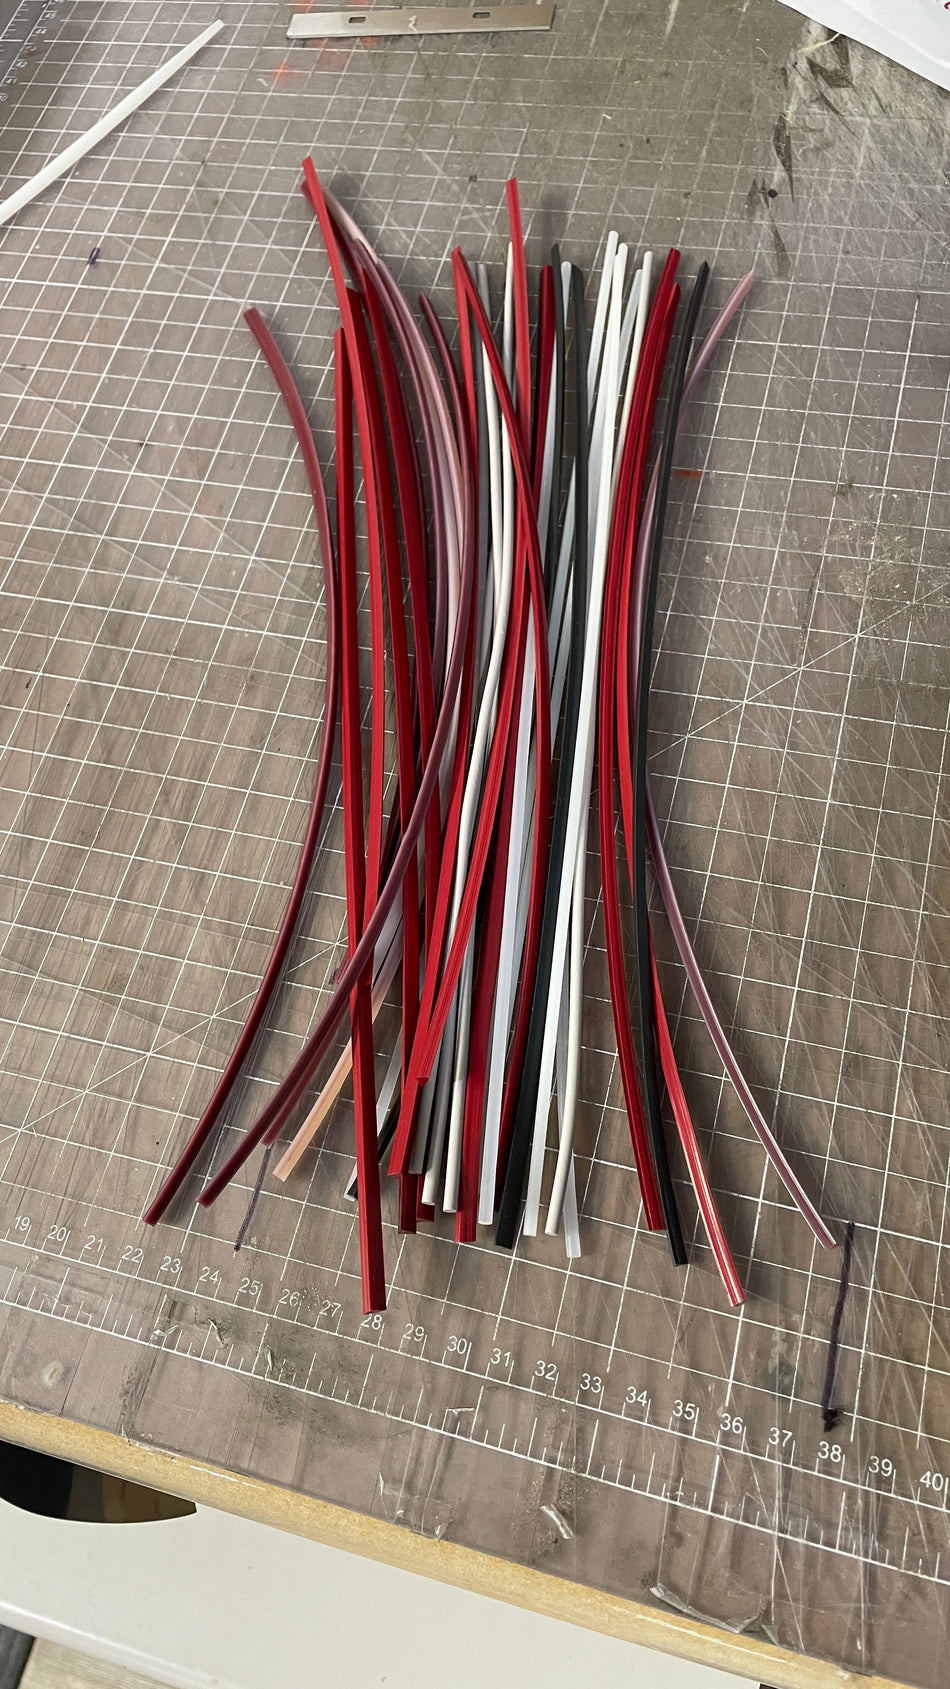 PP Off-Shape/Off Color - Pure Virgin PP Plastic Welding Rods, Coils & Reels (aka. Oops runs, startup & configuration runs)